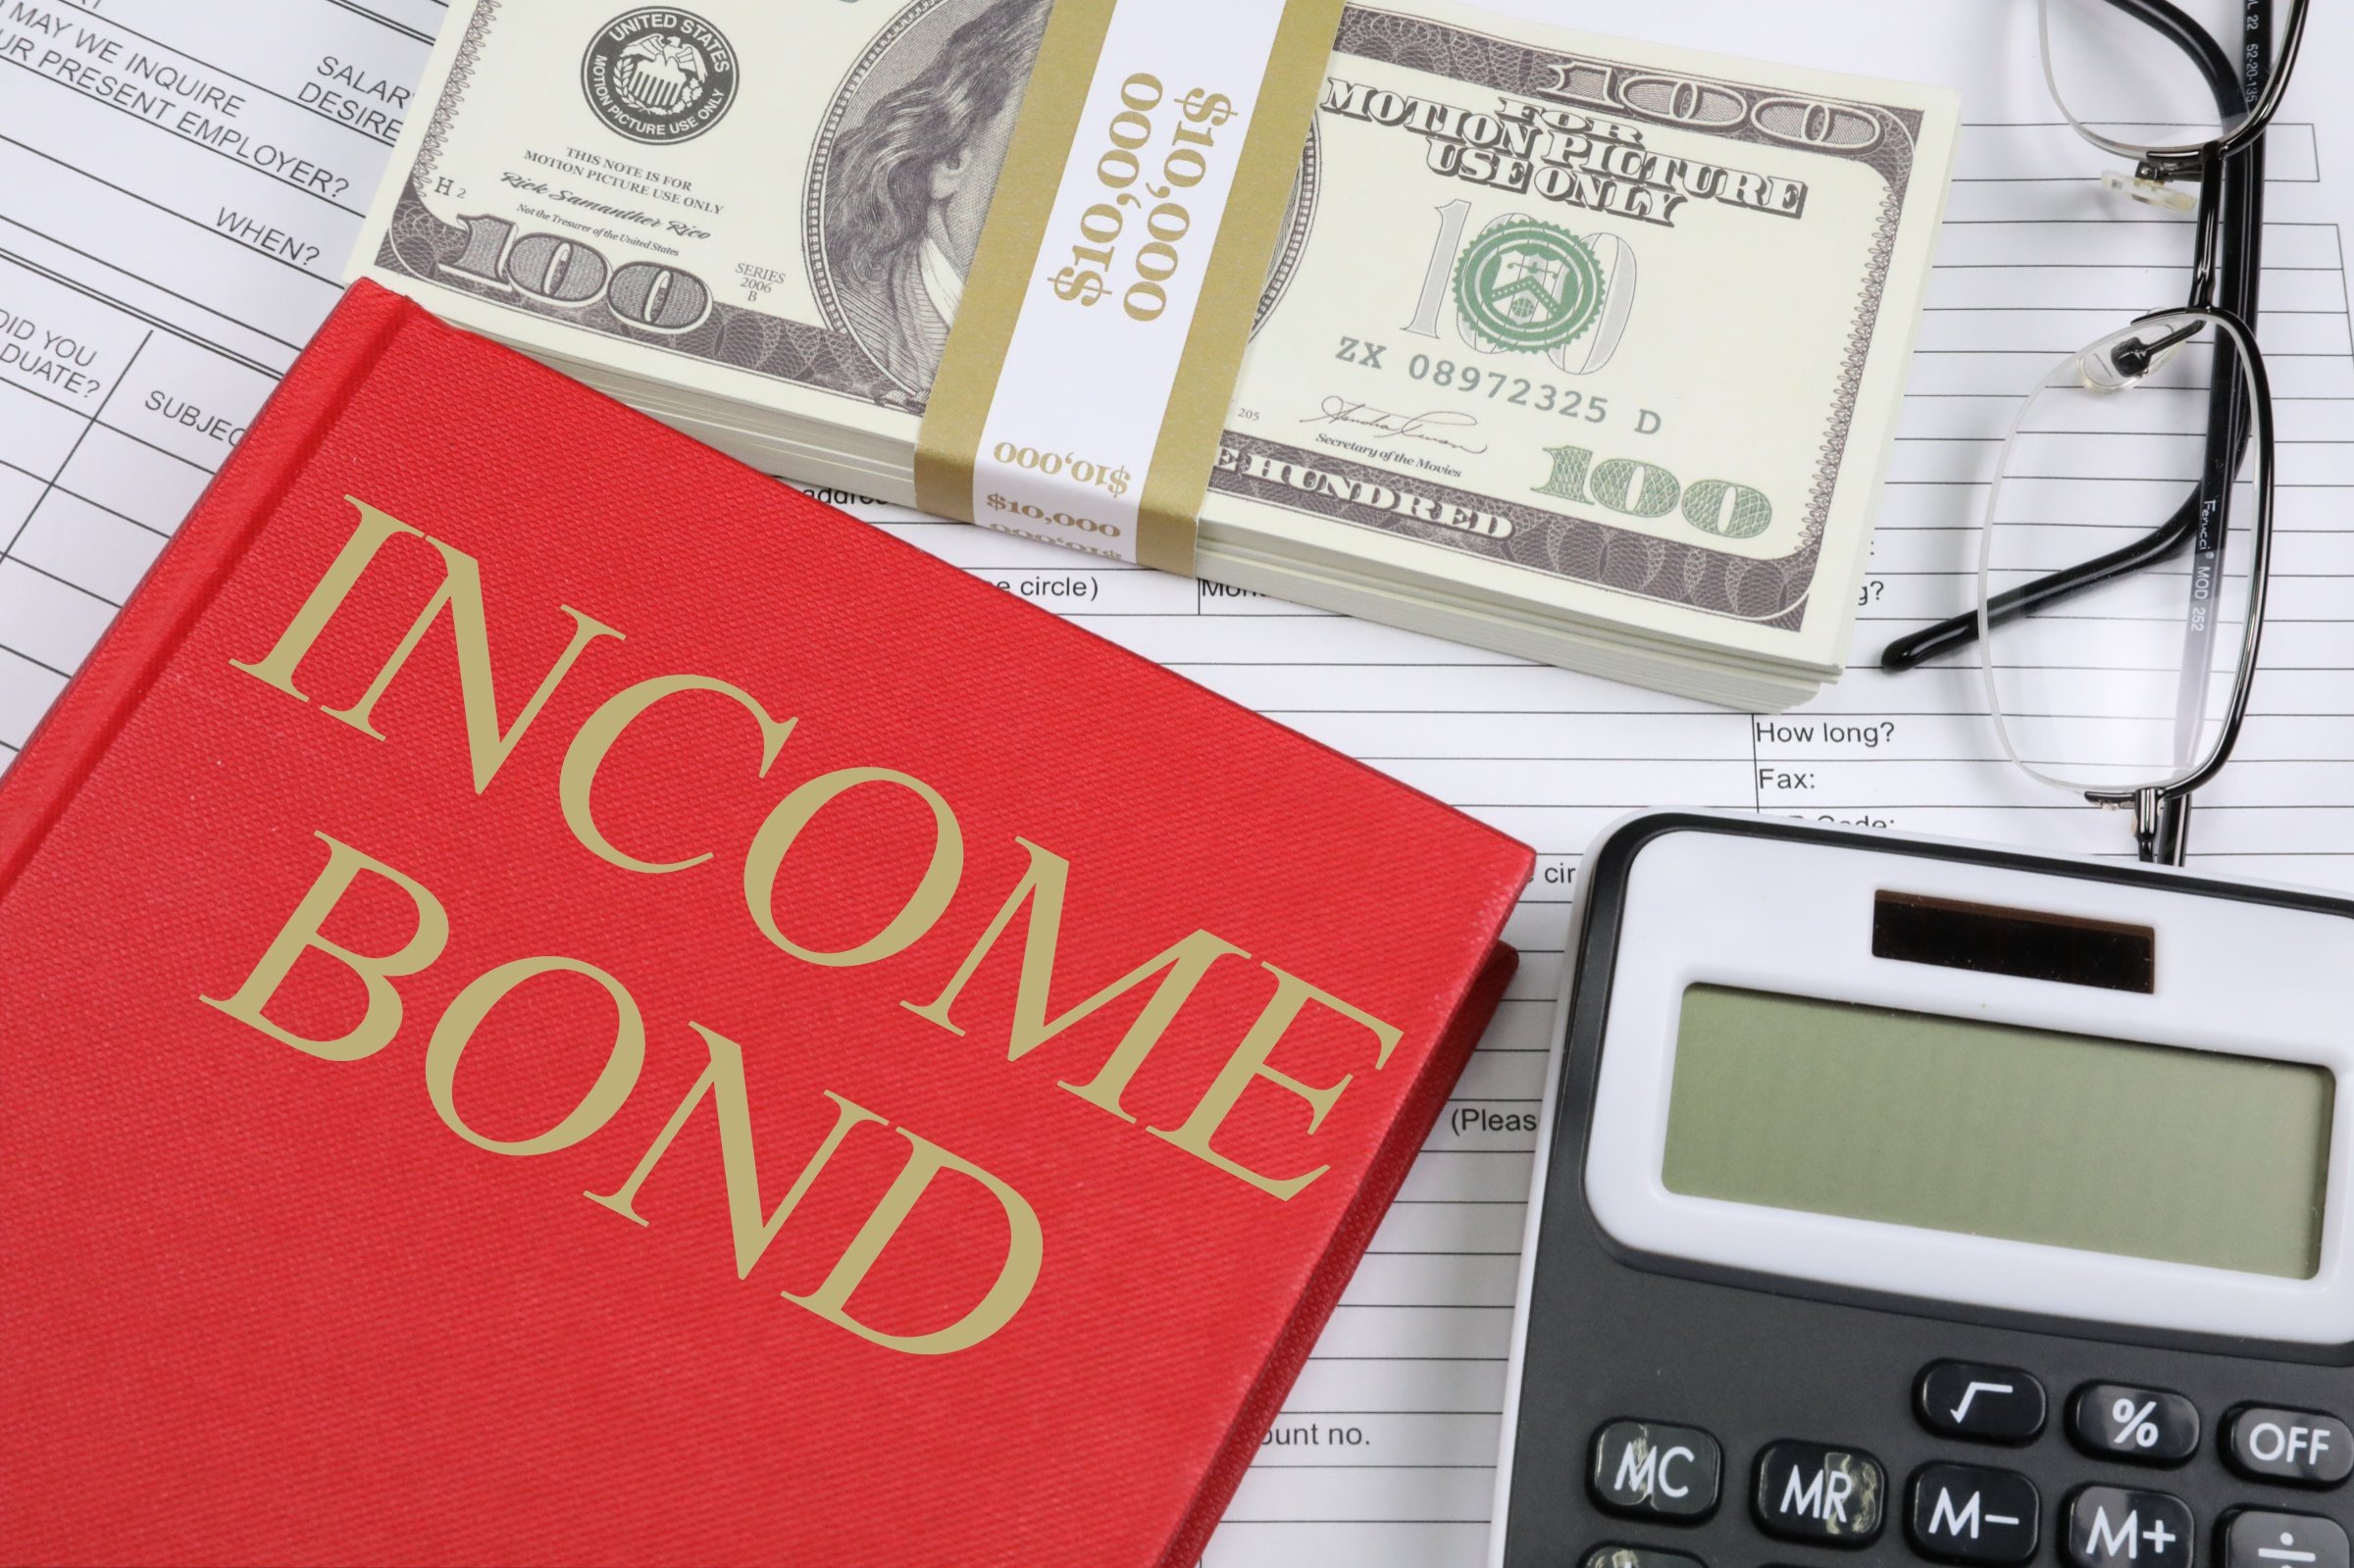 Bond Income Tax Return